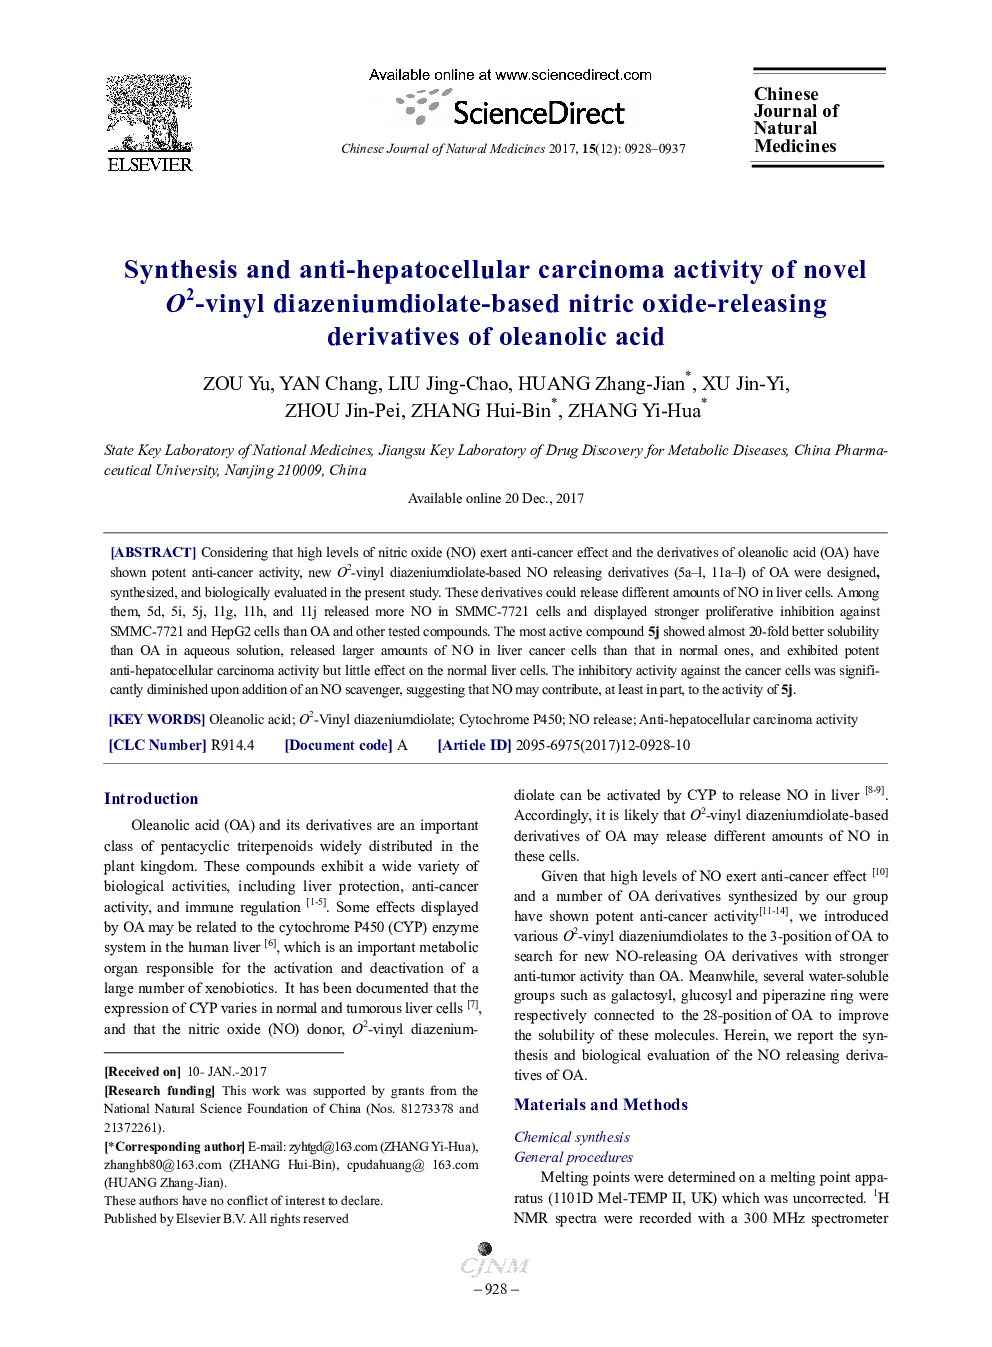 Synthesis and anti-hepatocellular carcinoma activity of novel O2-vinyl diazeniumdiolate-based nitric oxide-releasing derivatives of oleanolic acid